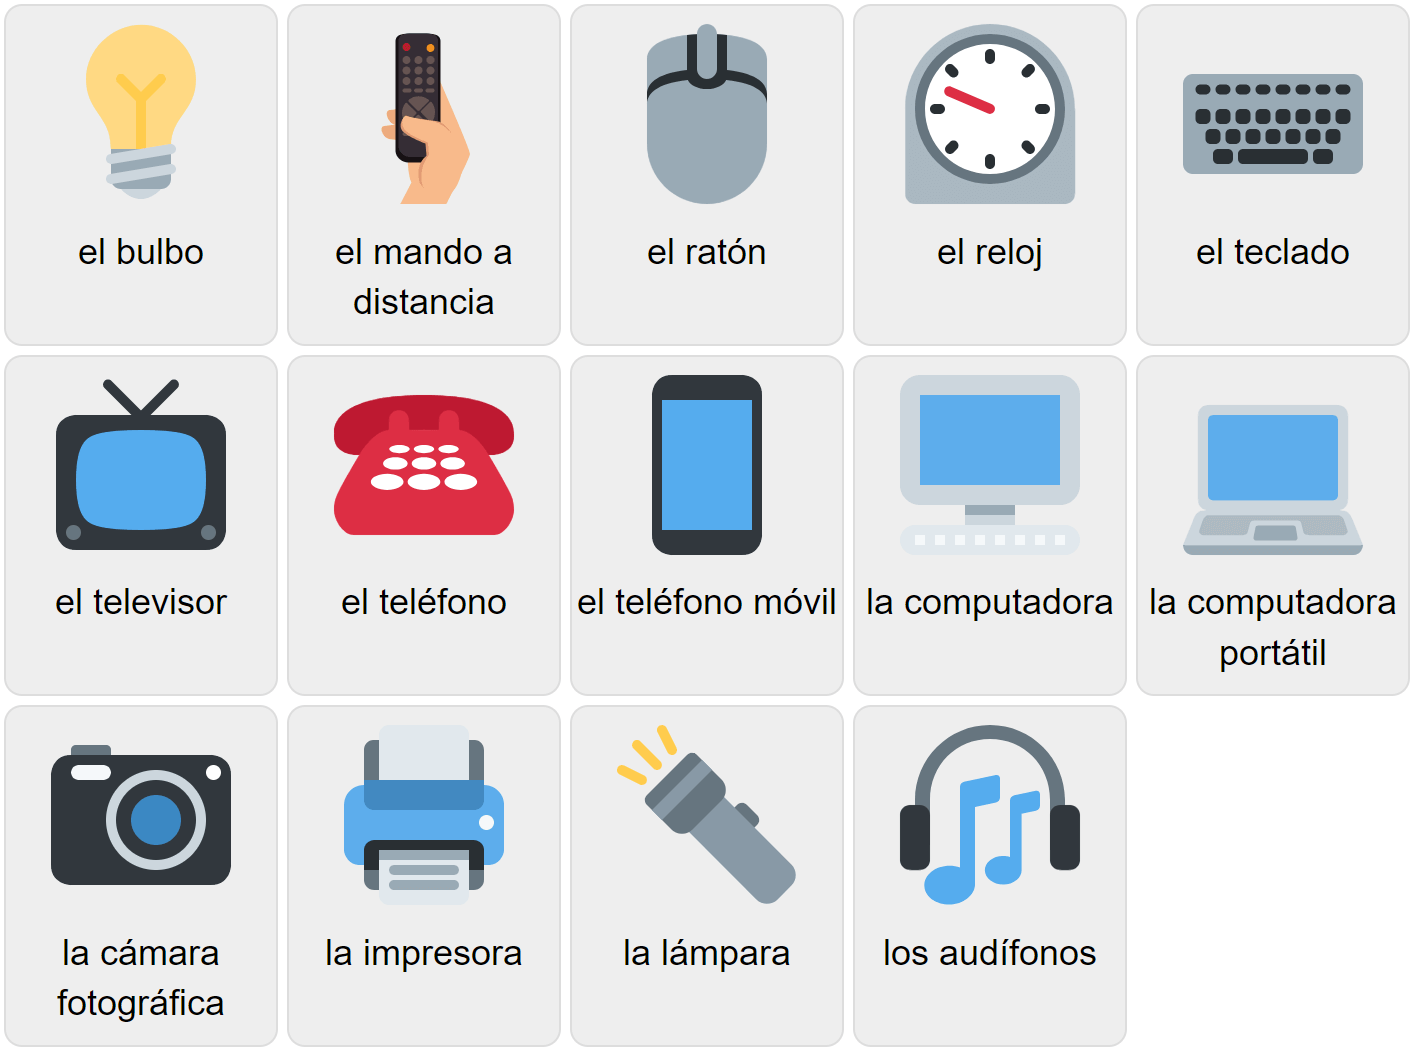 Electronics in Spanish